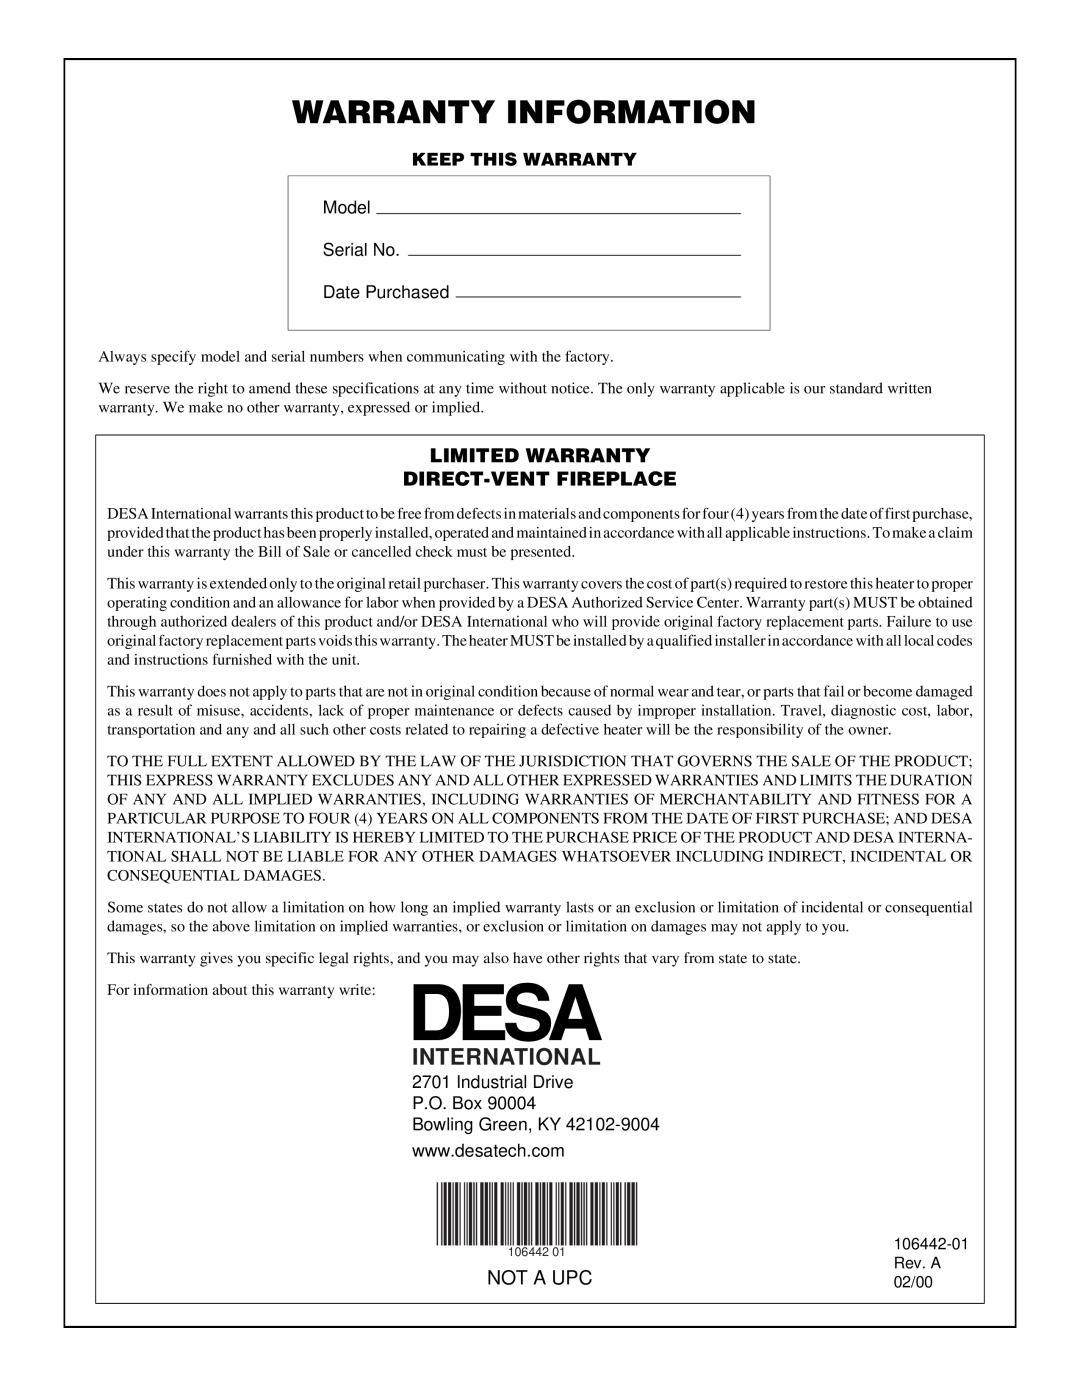 Desa MDVFST Limited Warranty Direct-Ventfireplace, Keep This Warranty, Warranty Information, International, Not A Upc 